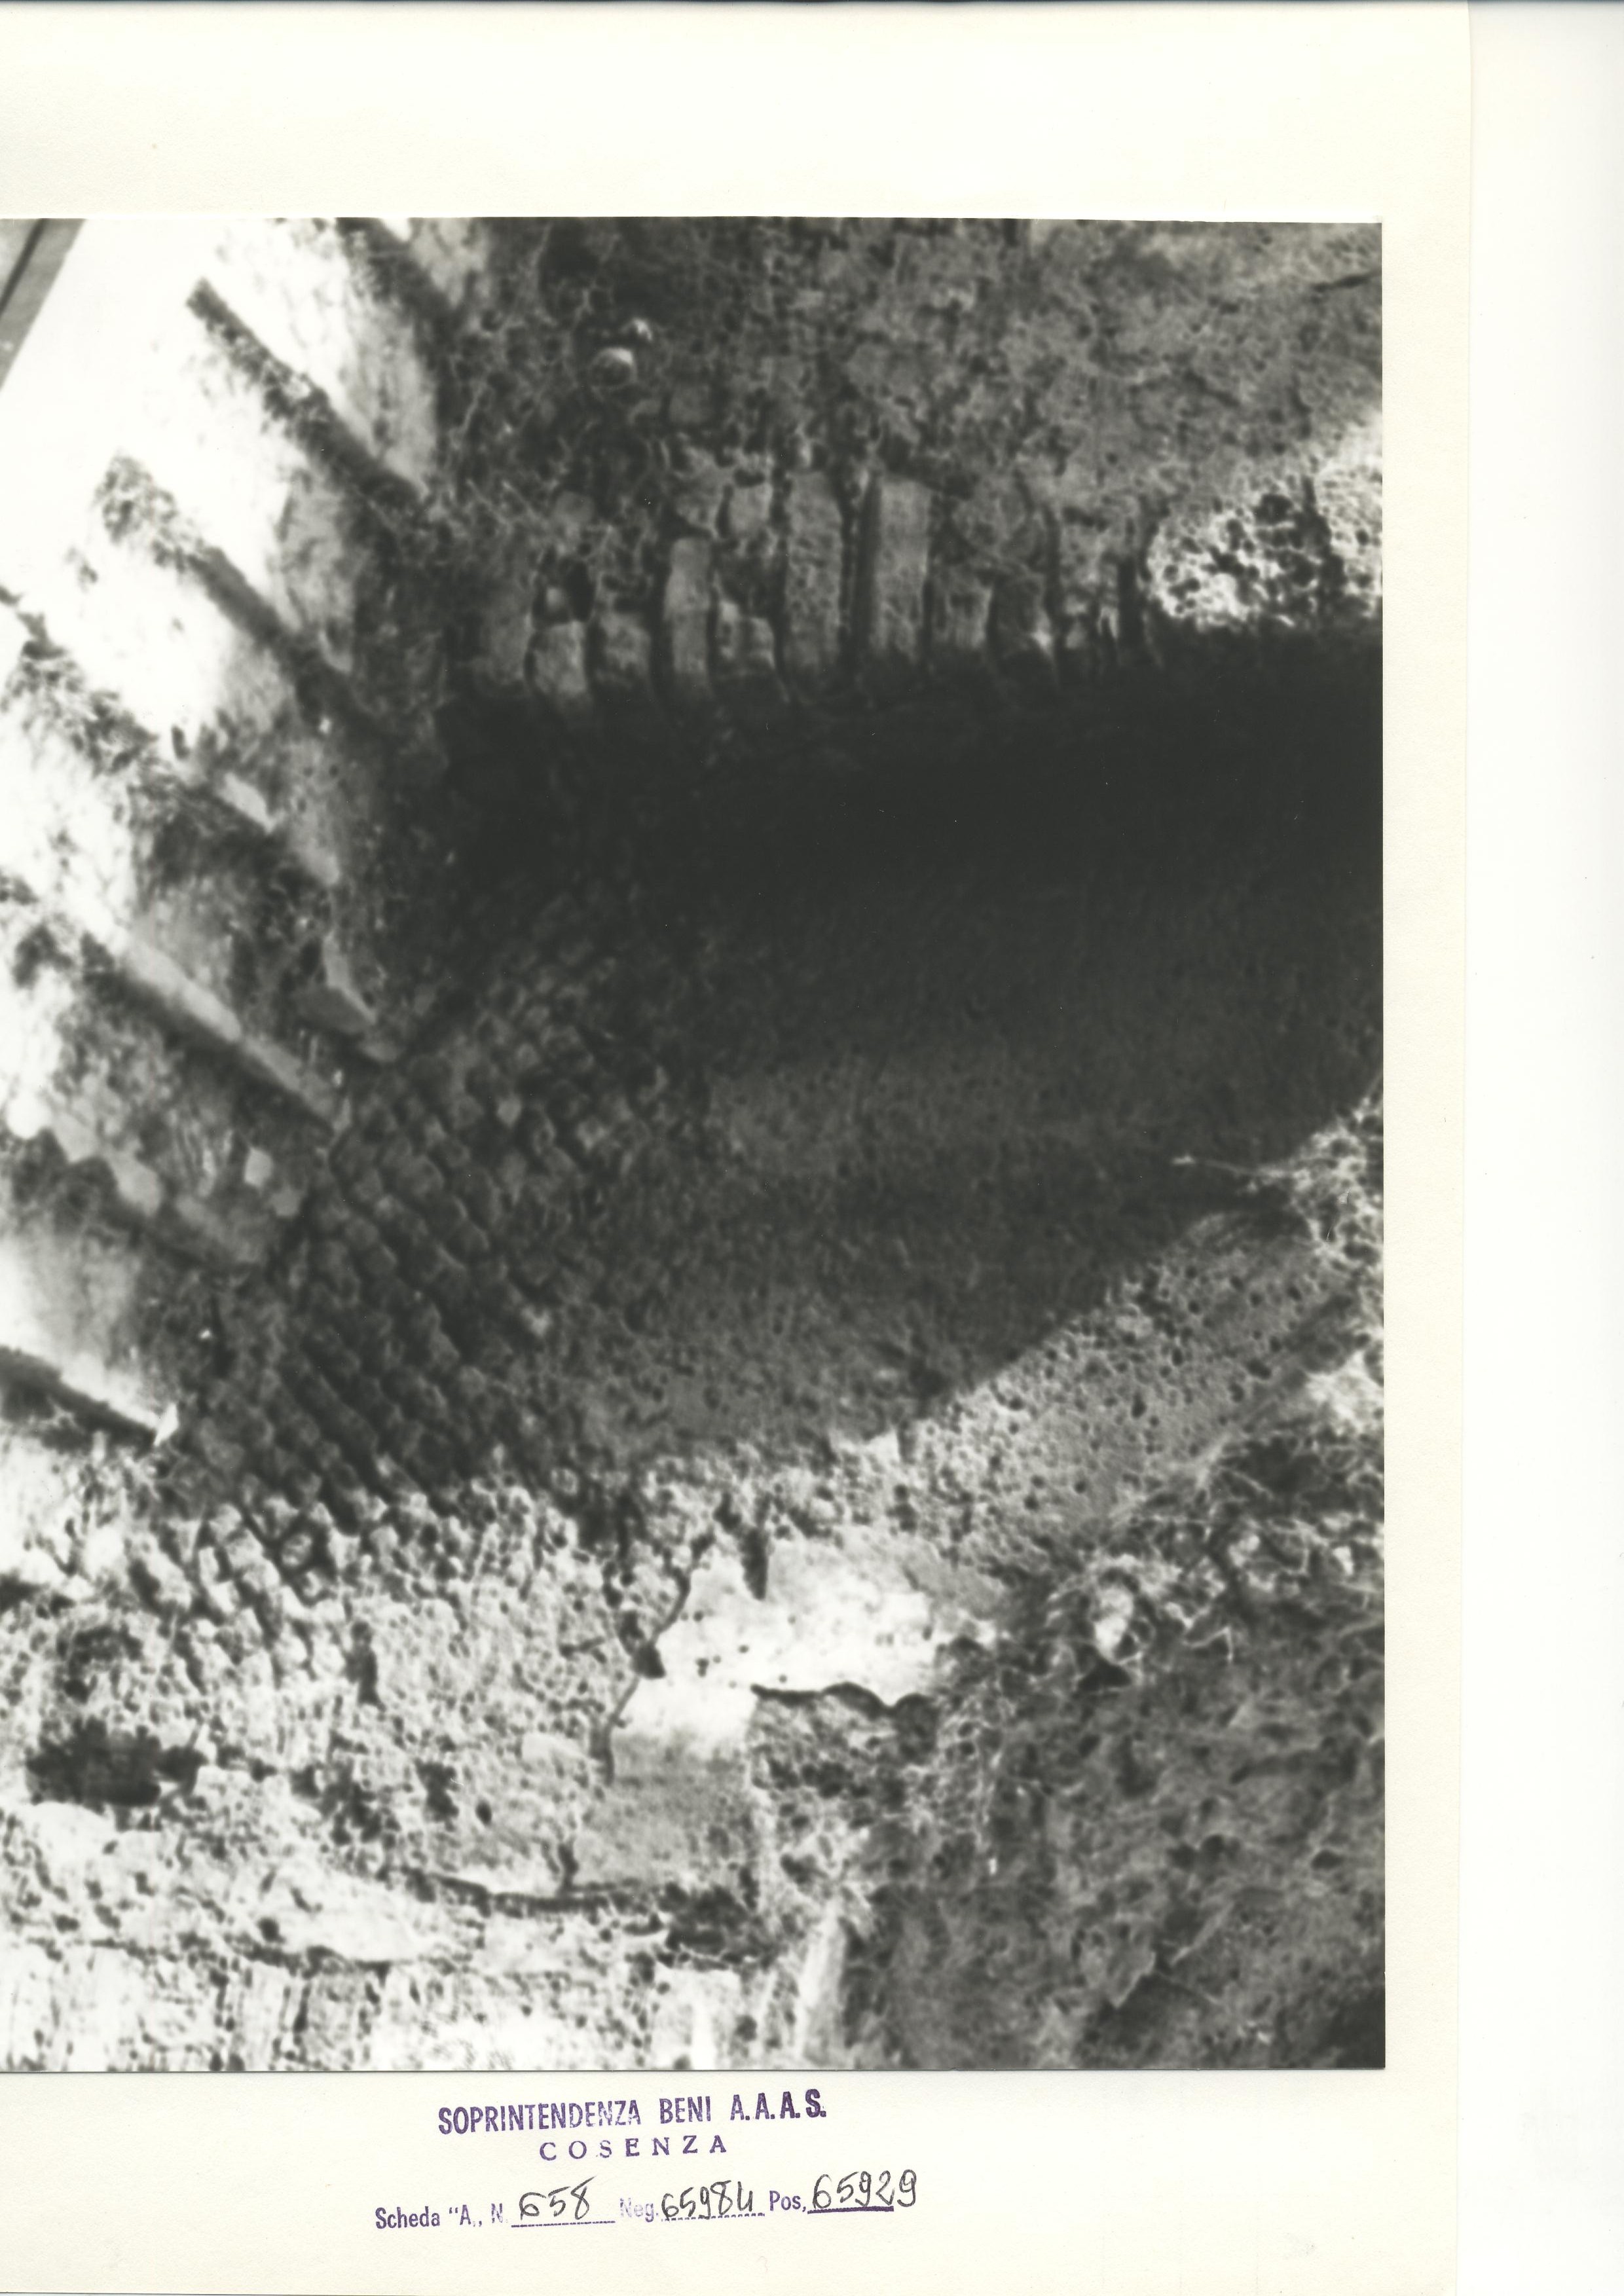 avanzi di struttura muraria (cinta muraria romana) - Cosenza (CS) 